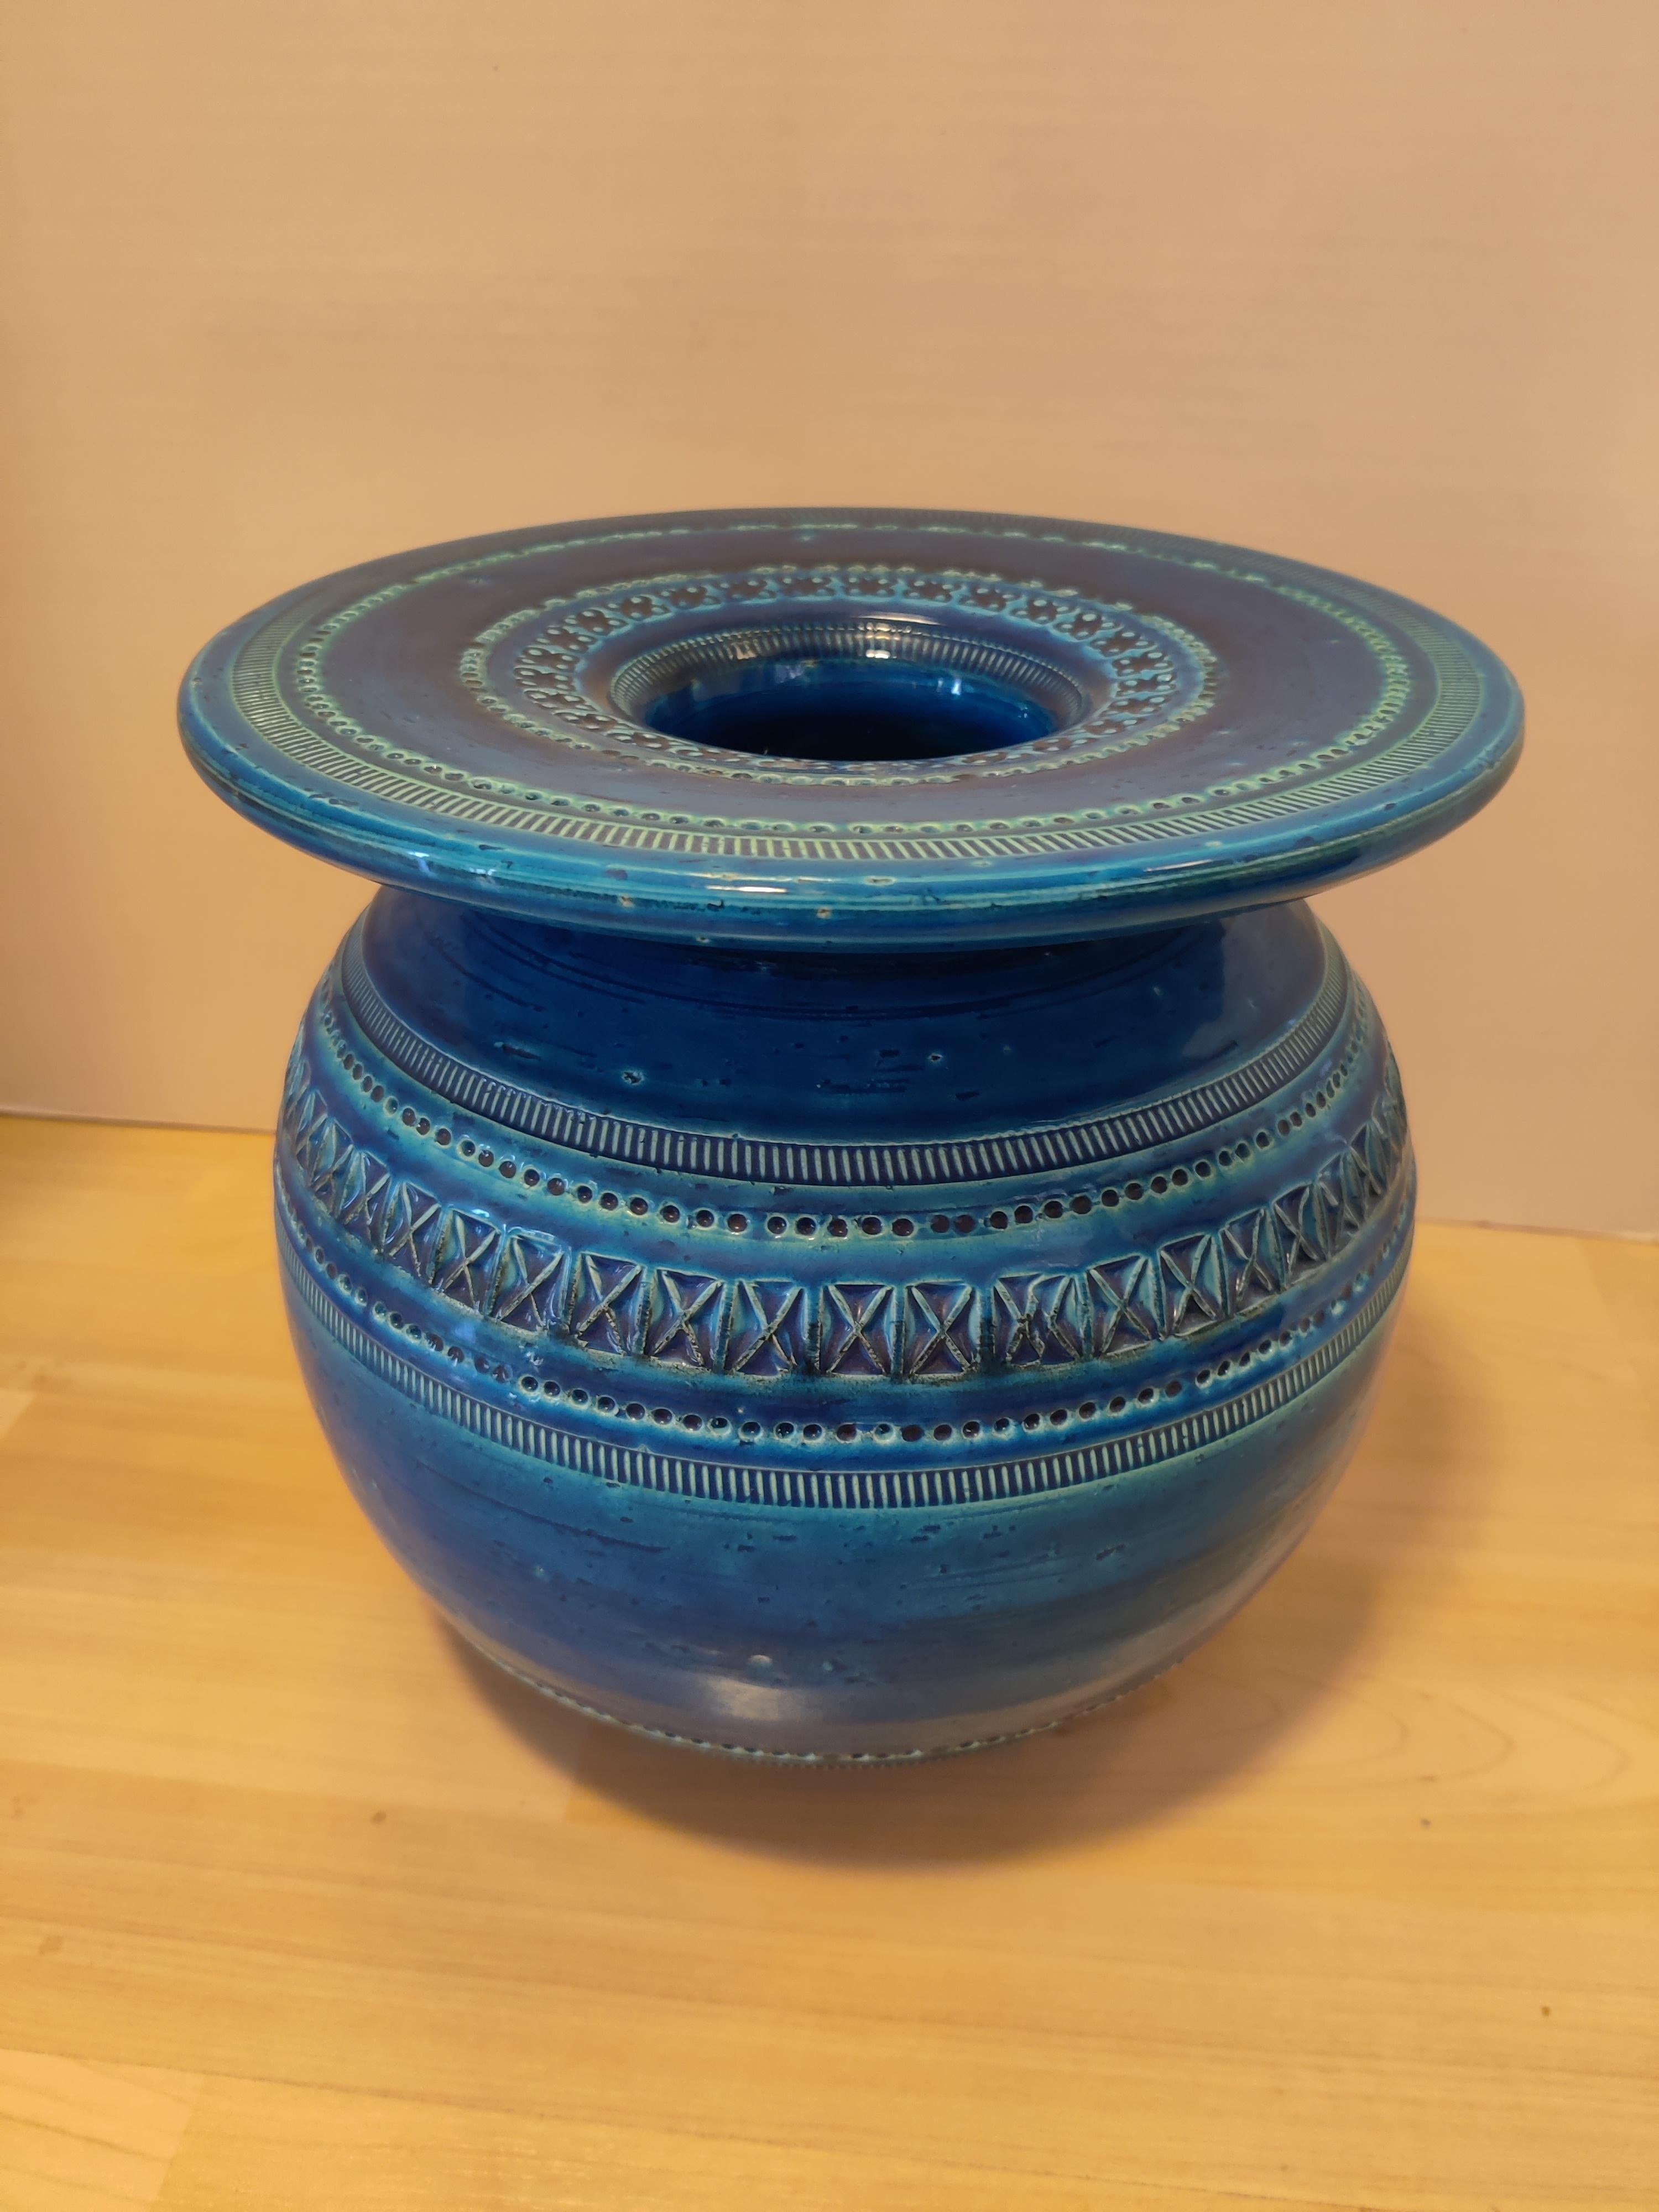 Aldo Londi Large Mid Century Remini Blue Flavia Vase Bitossi Italian
Motelupo, Italy
Hand thrown and incised.